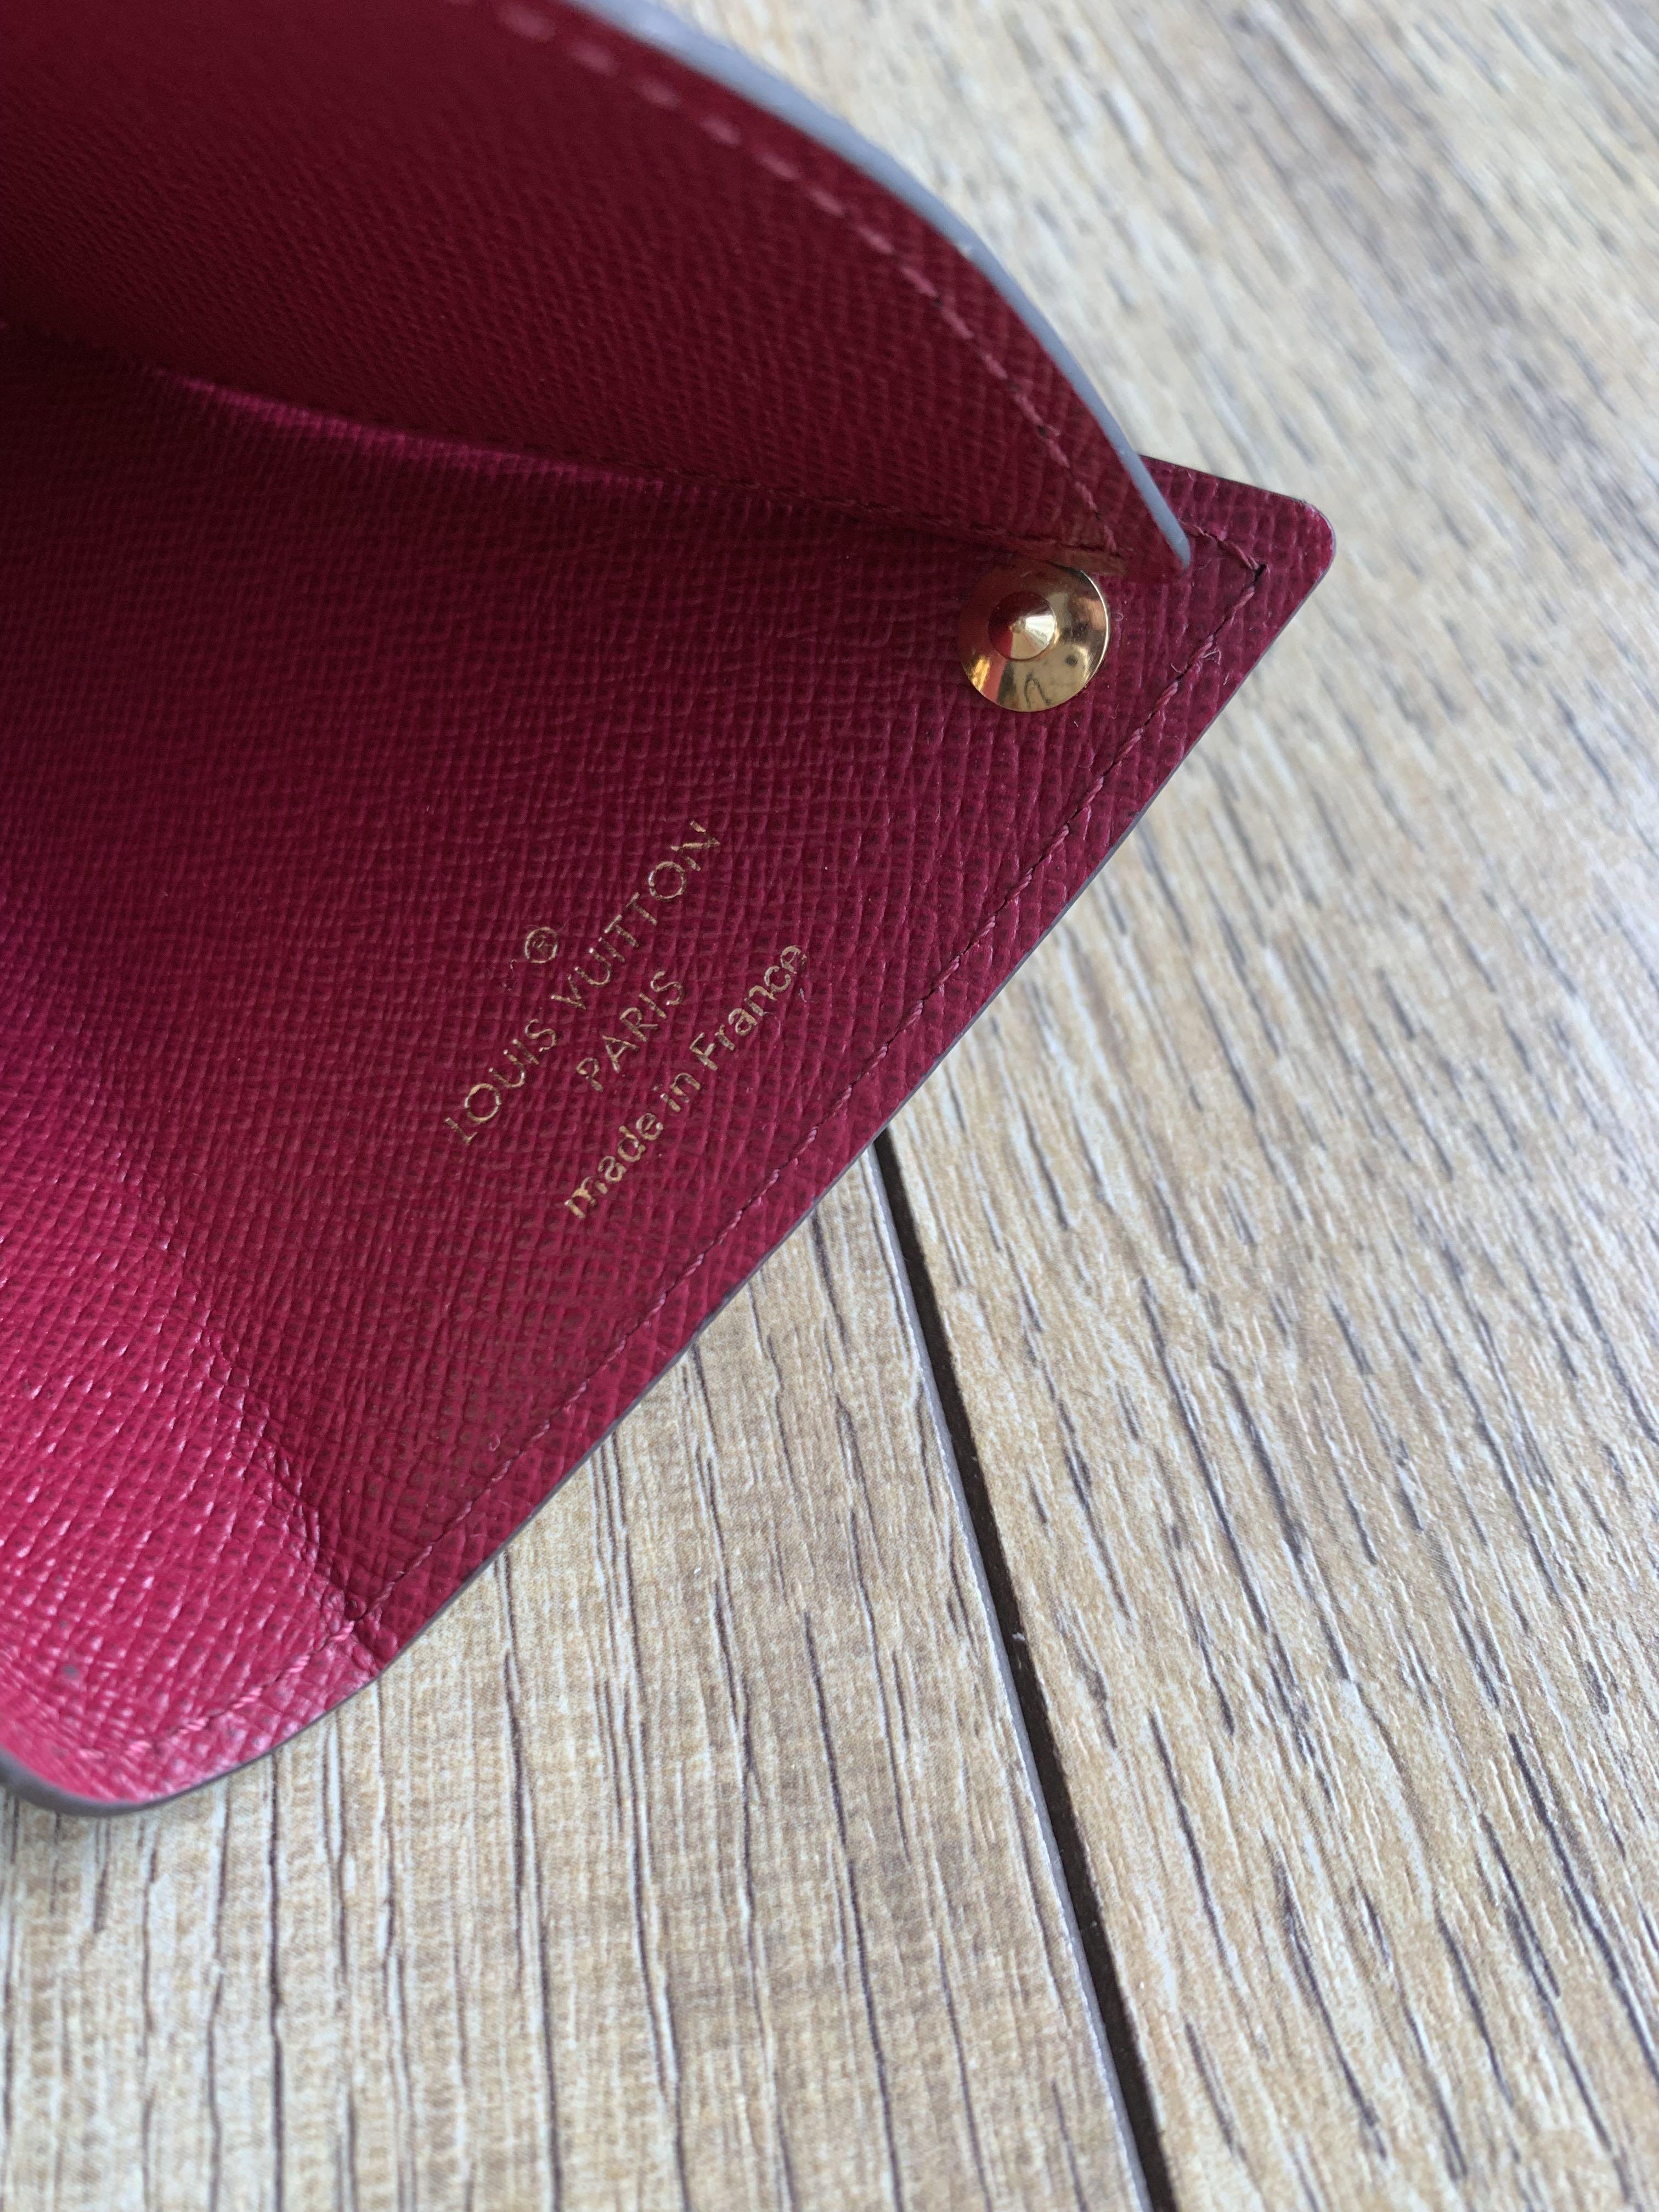 Louis Vuitton Pink and Beige Monogram Empreinte Berlingot Bag Charm Gold Hardware, 2021 (Like New)